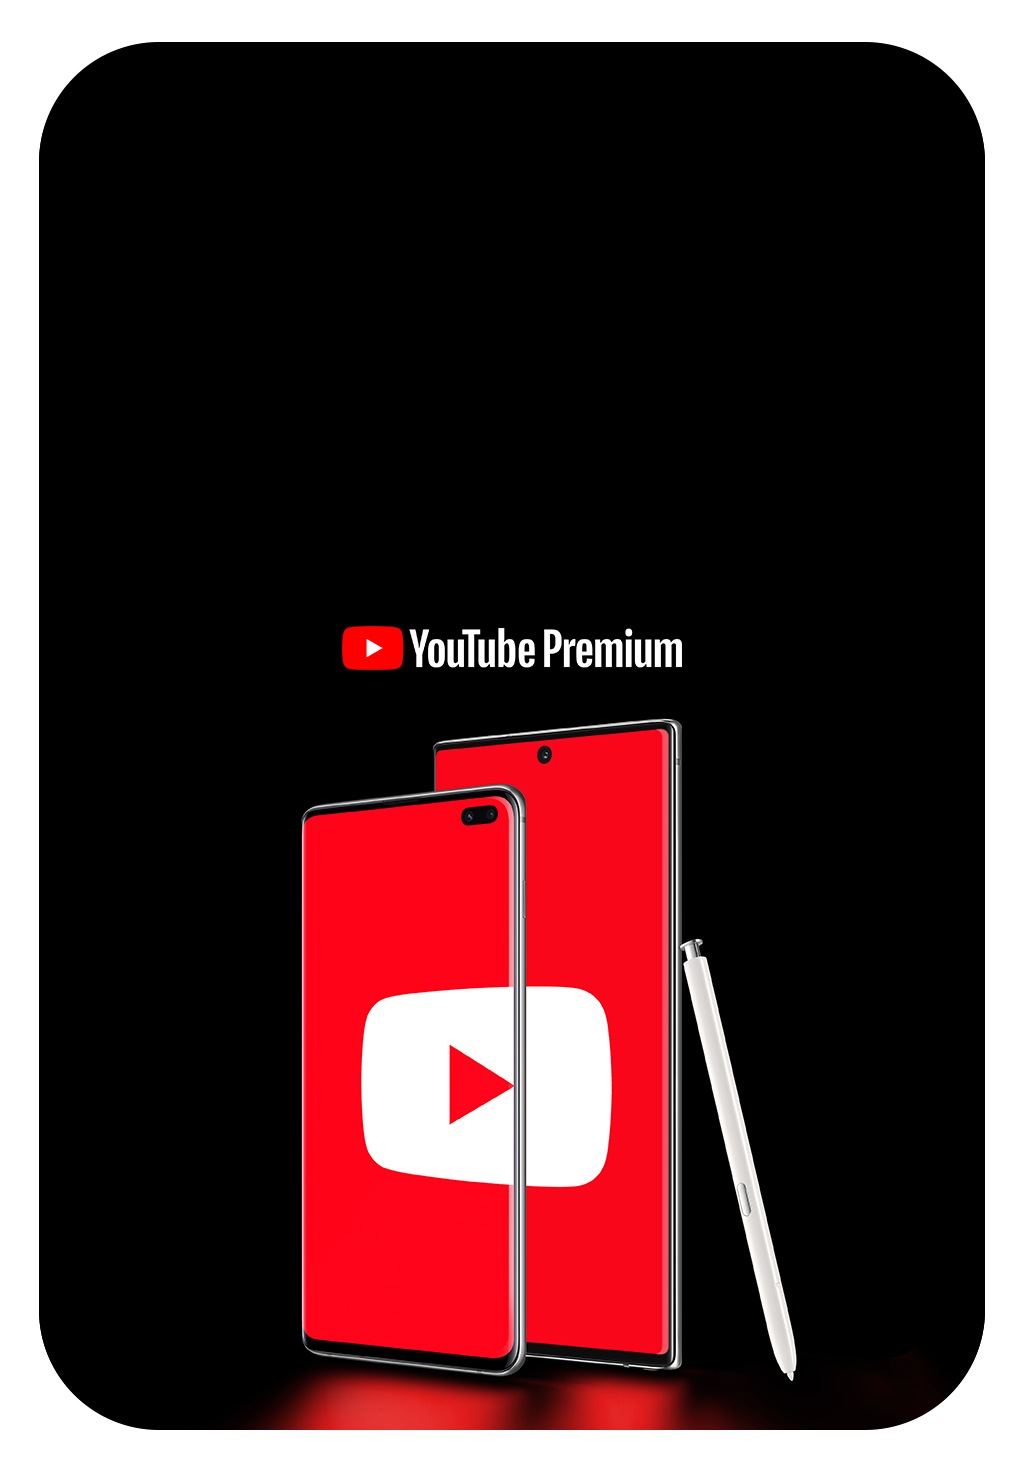 Enjoy Youtube Premium On Us Samsung Saudi Arabia